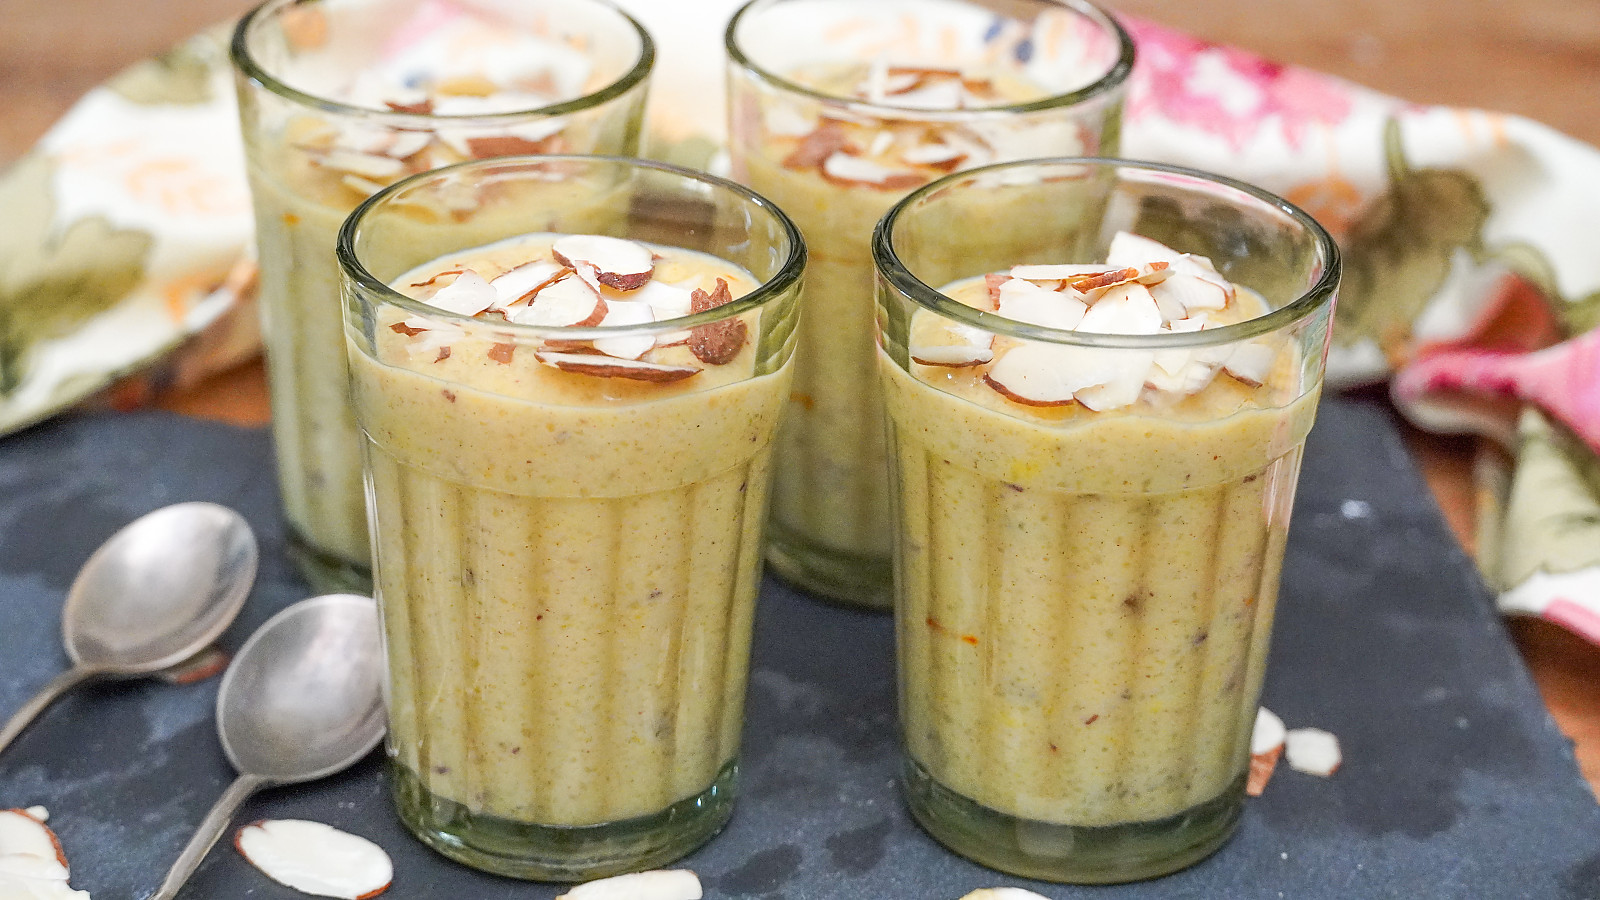 Gulab Phirni Recipe - Rose Flavoured Rice Pudding Shots